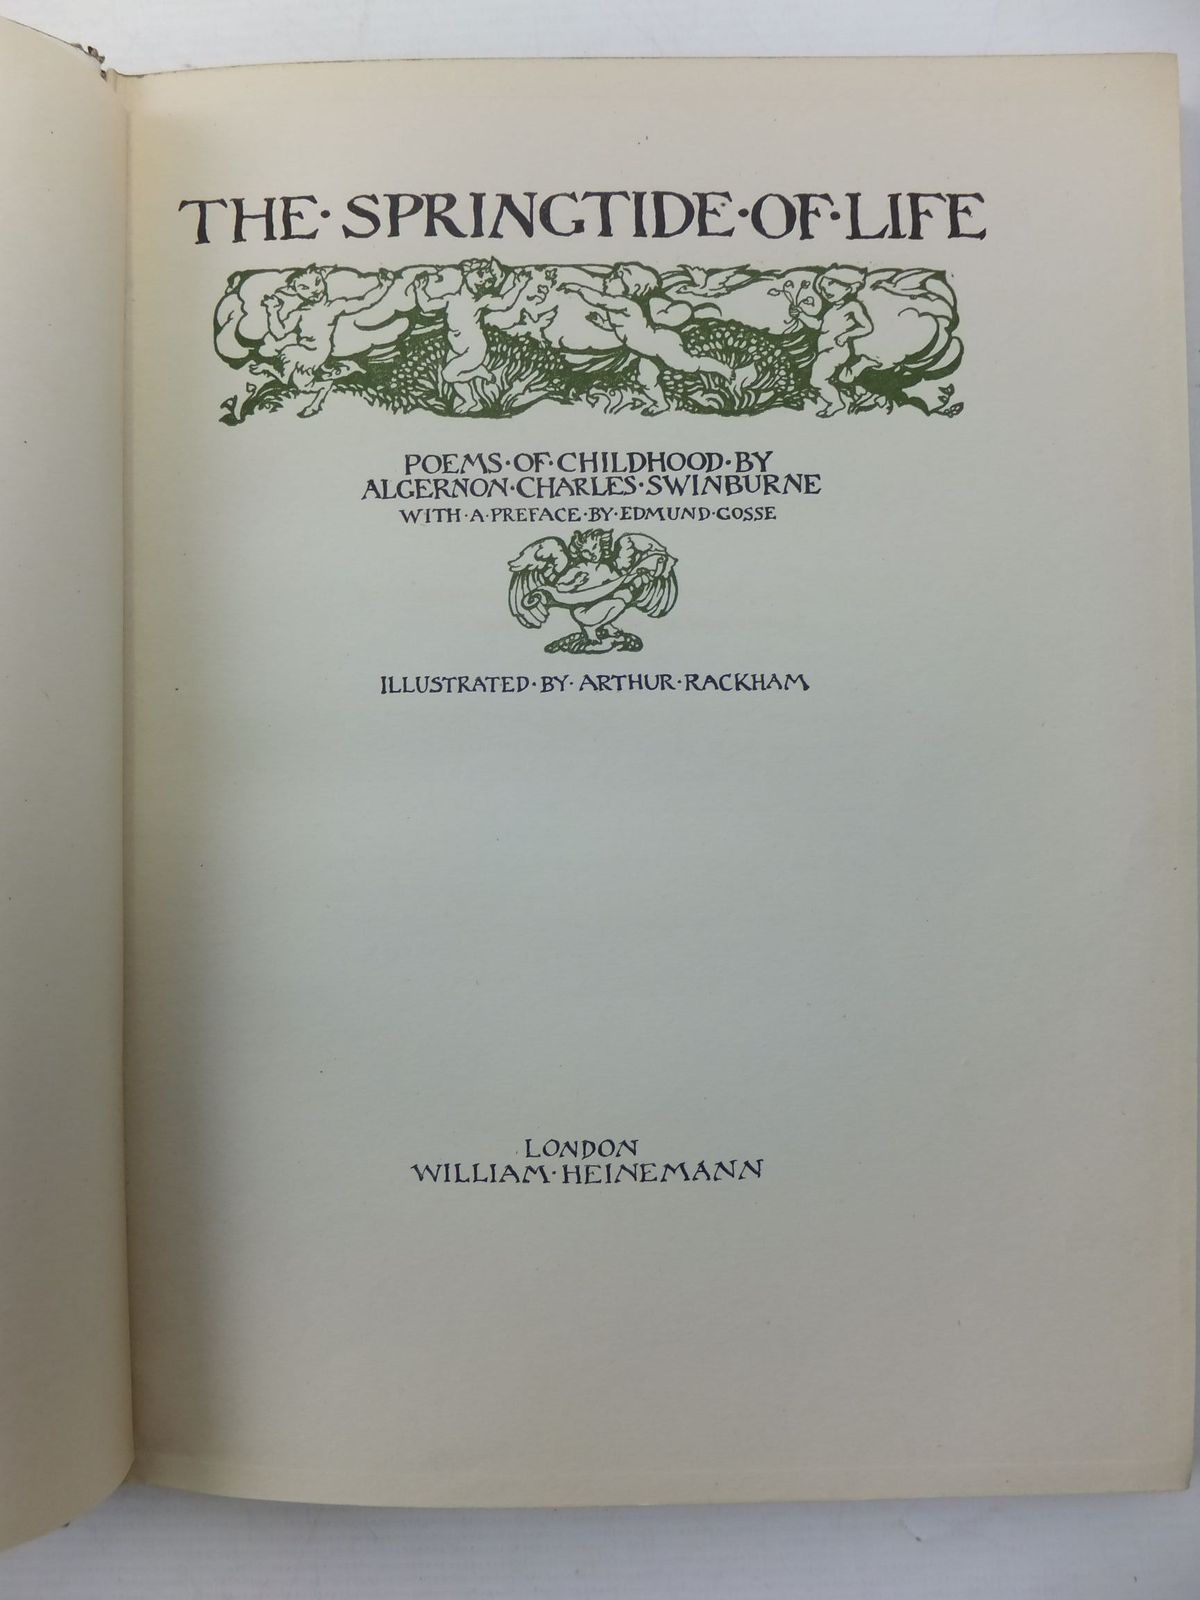 Photo of THE SPRINGTIDE OF LIFE written by Swinburne, Algernon C.
Gosse, Edmund illustrated by Rackham, Arthur published by William Heinemann (STOCK CODE: 1108627)  for sale by Stella & Rose's Books